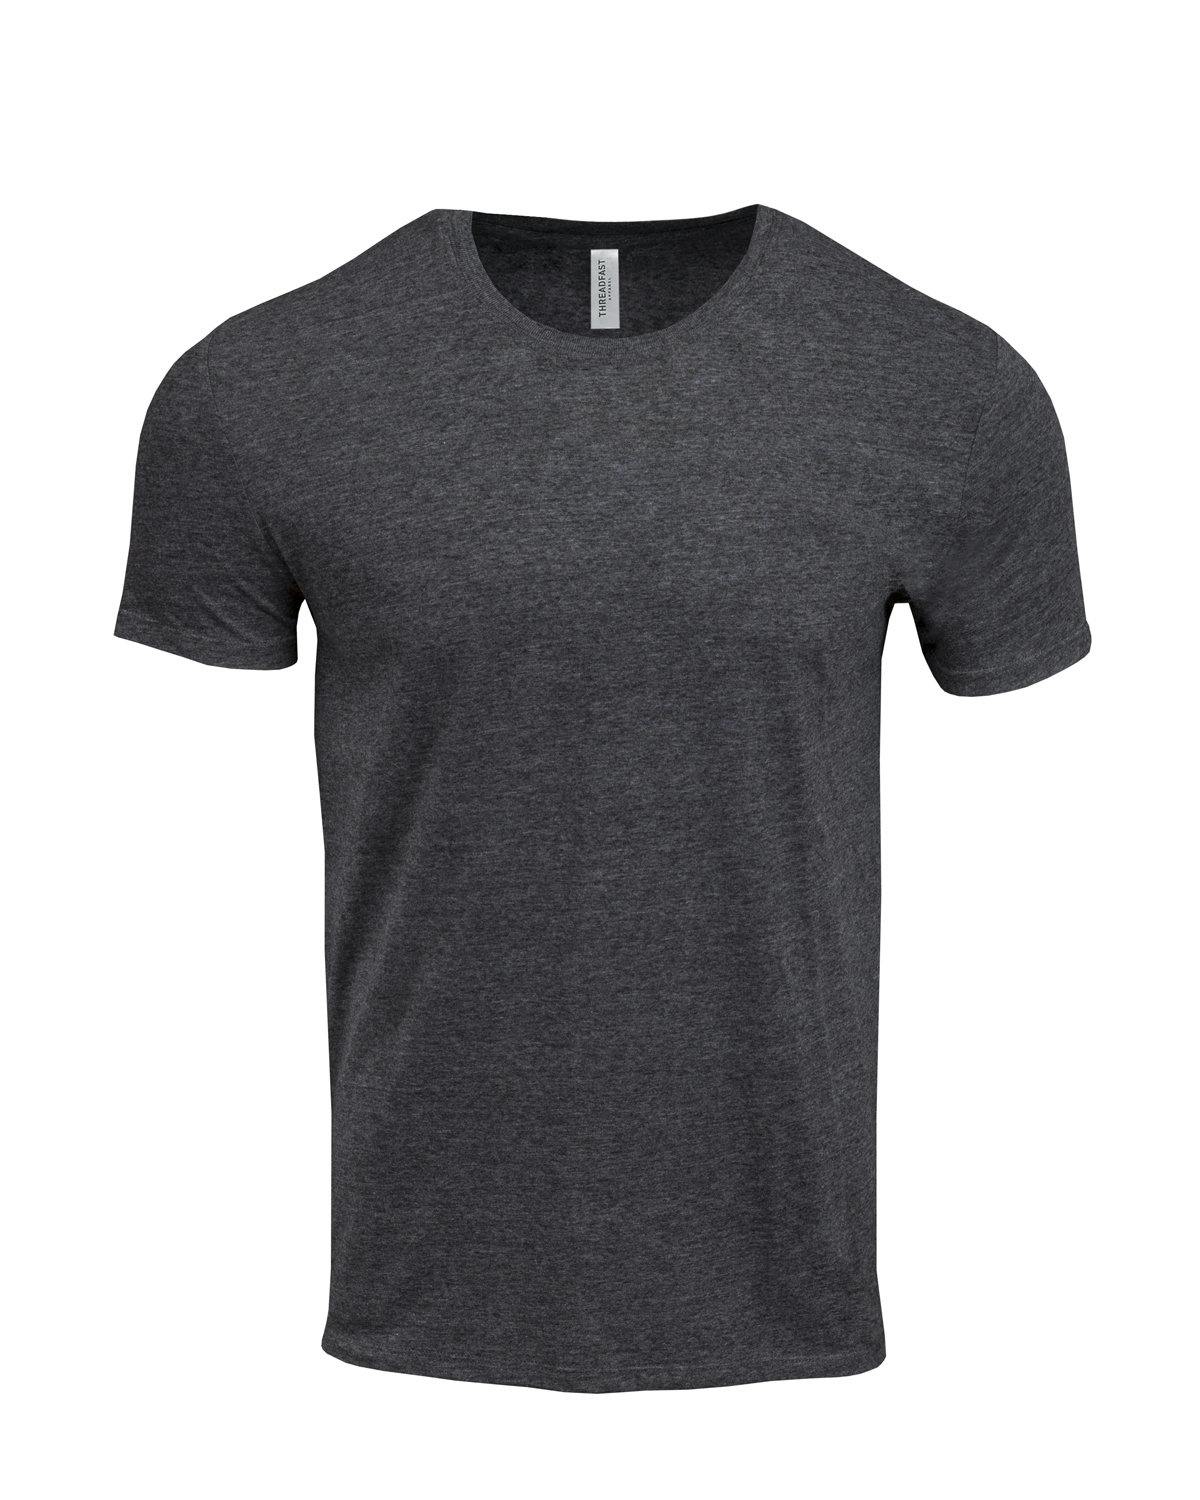 Image for Unisex Triblend Short-Sleeve T-Shirt